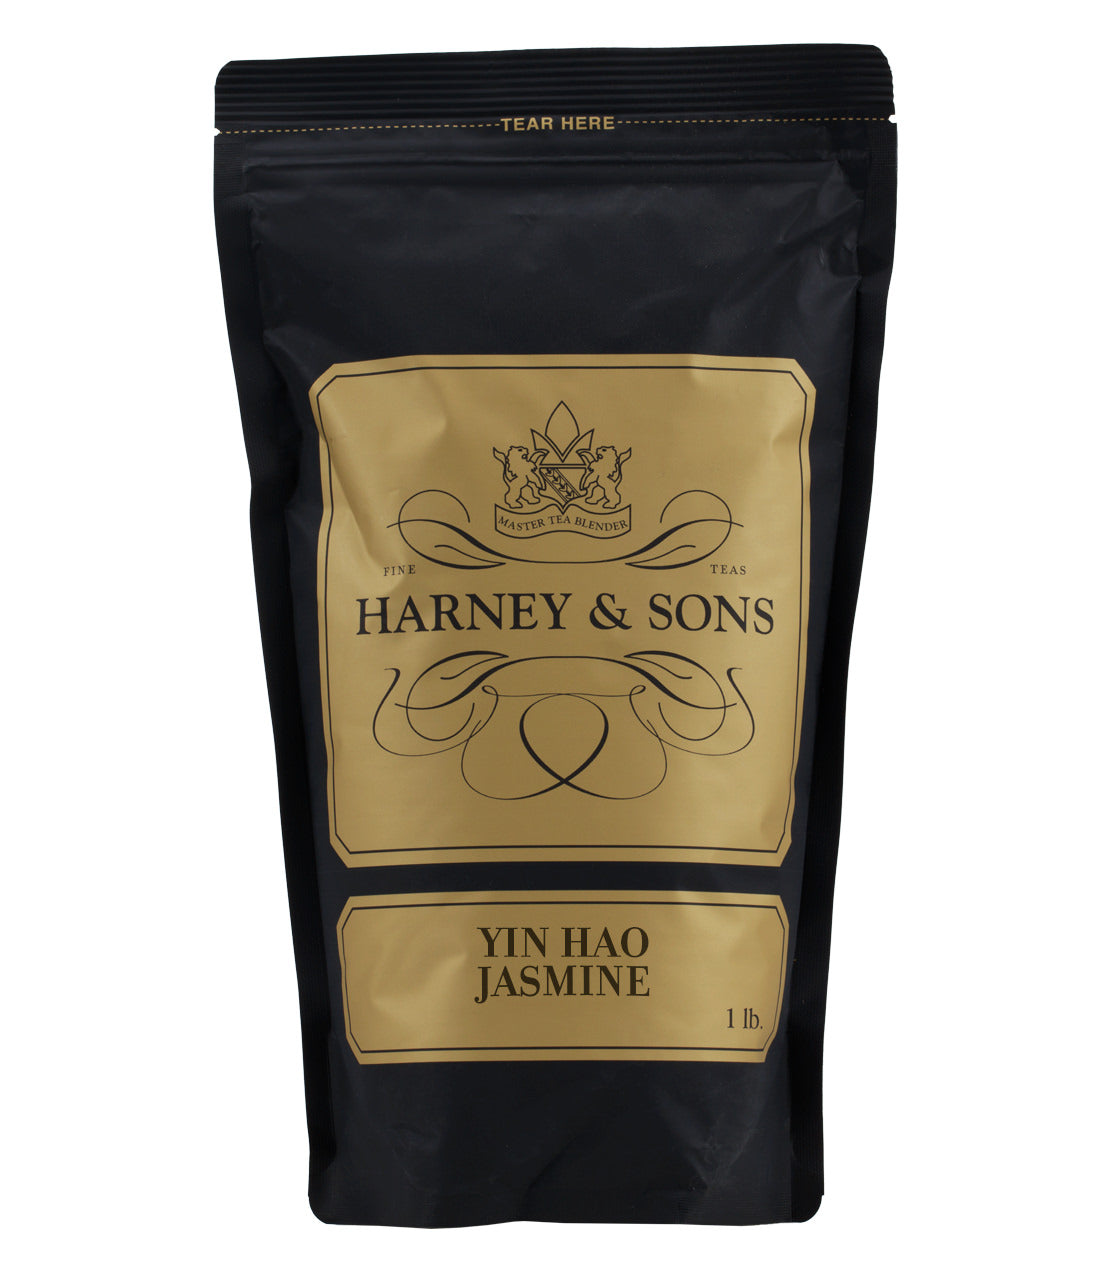 Yin Hao Jasmine - Loose 1 lb. Bag - Harney & Sons Fine Teas